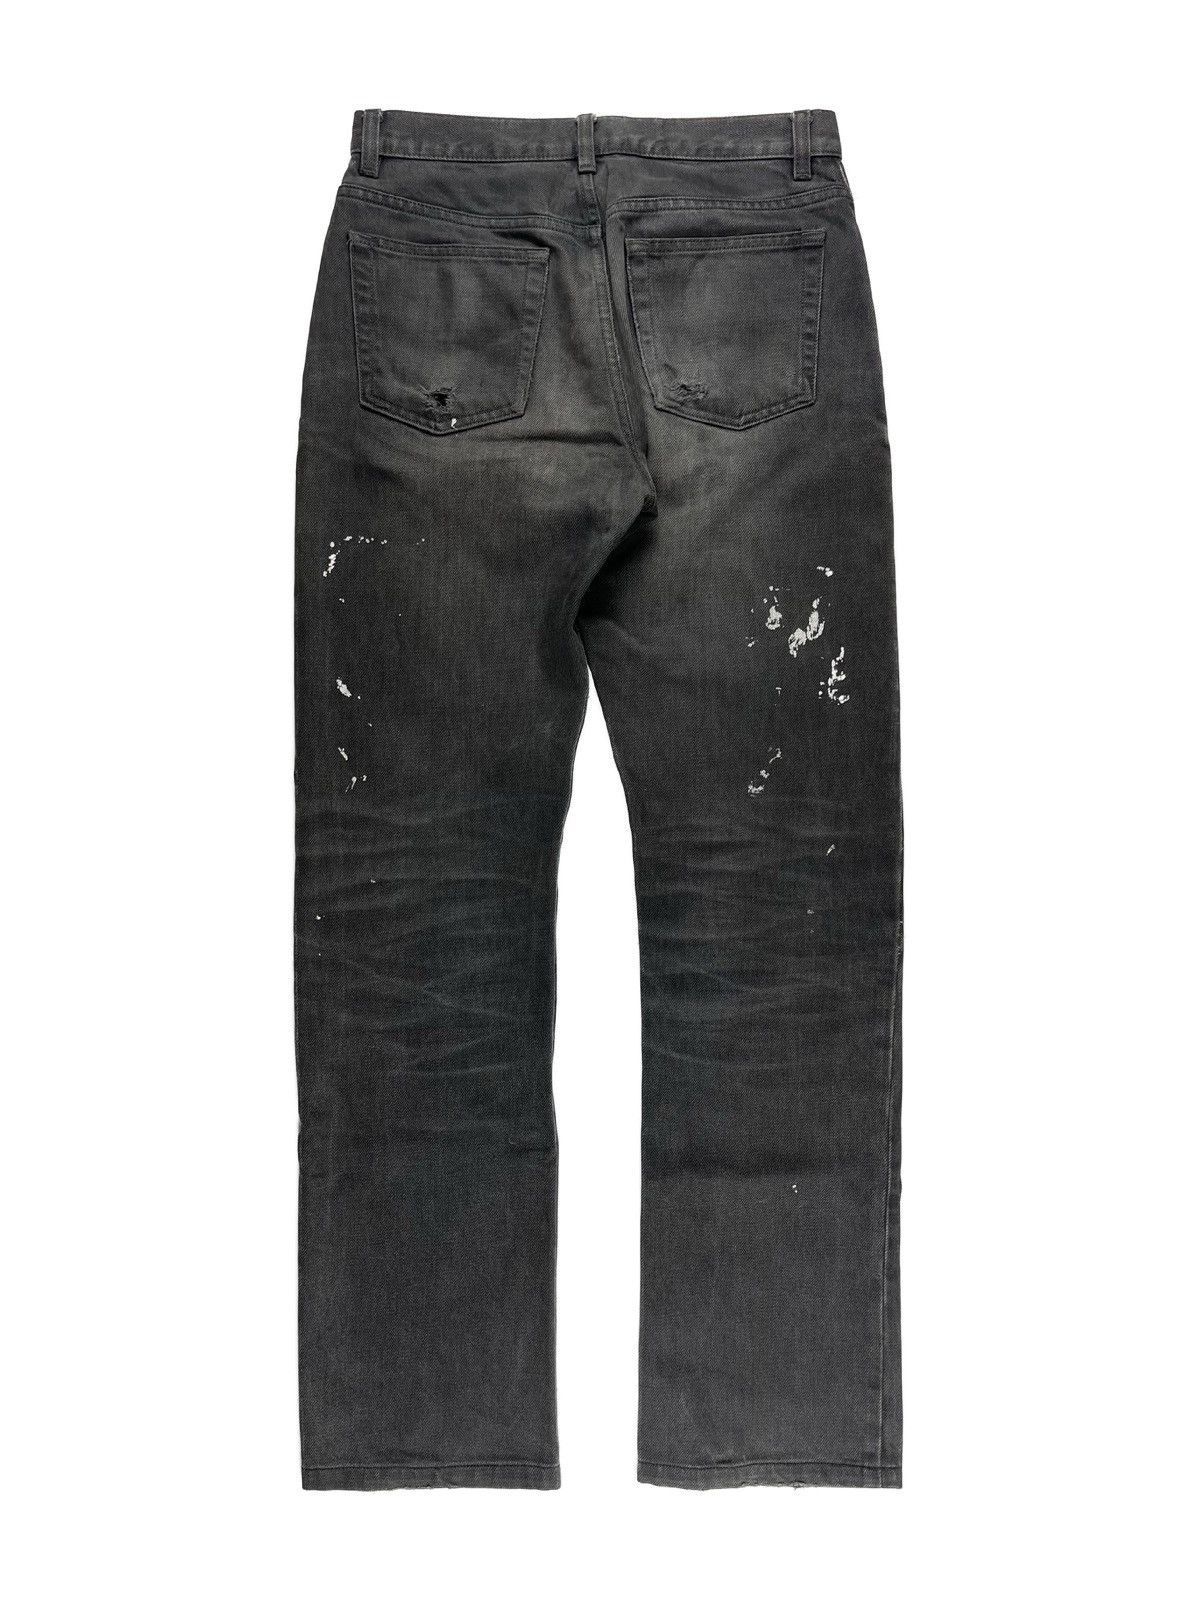 Vintage AW00 Helmut Lang Charcoal Bootcut Painter Denim Jeans Size US 27 - 2 Preview